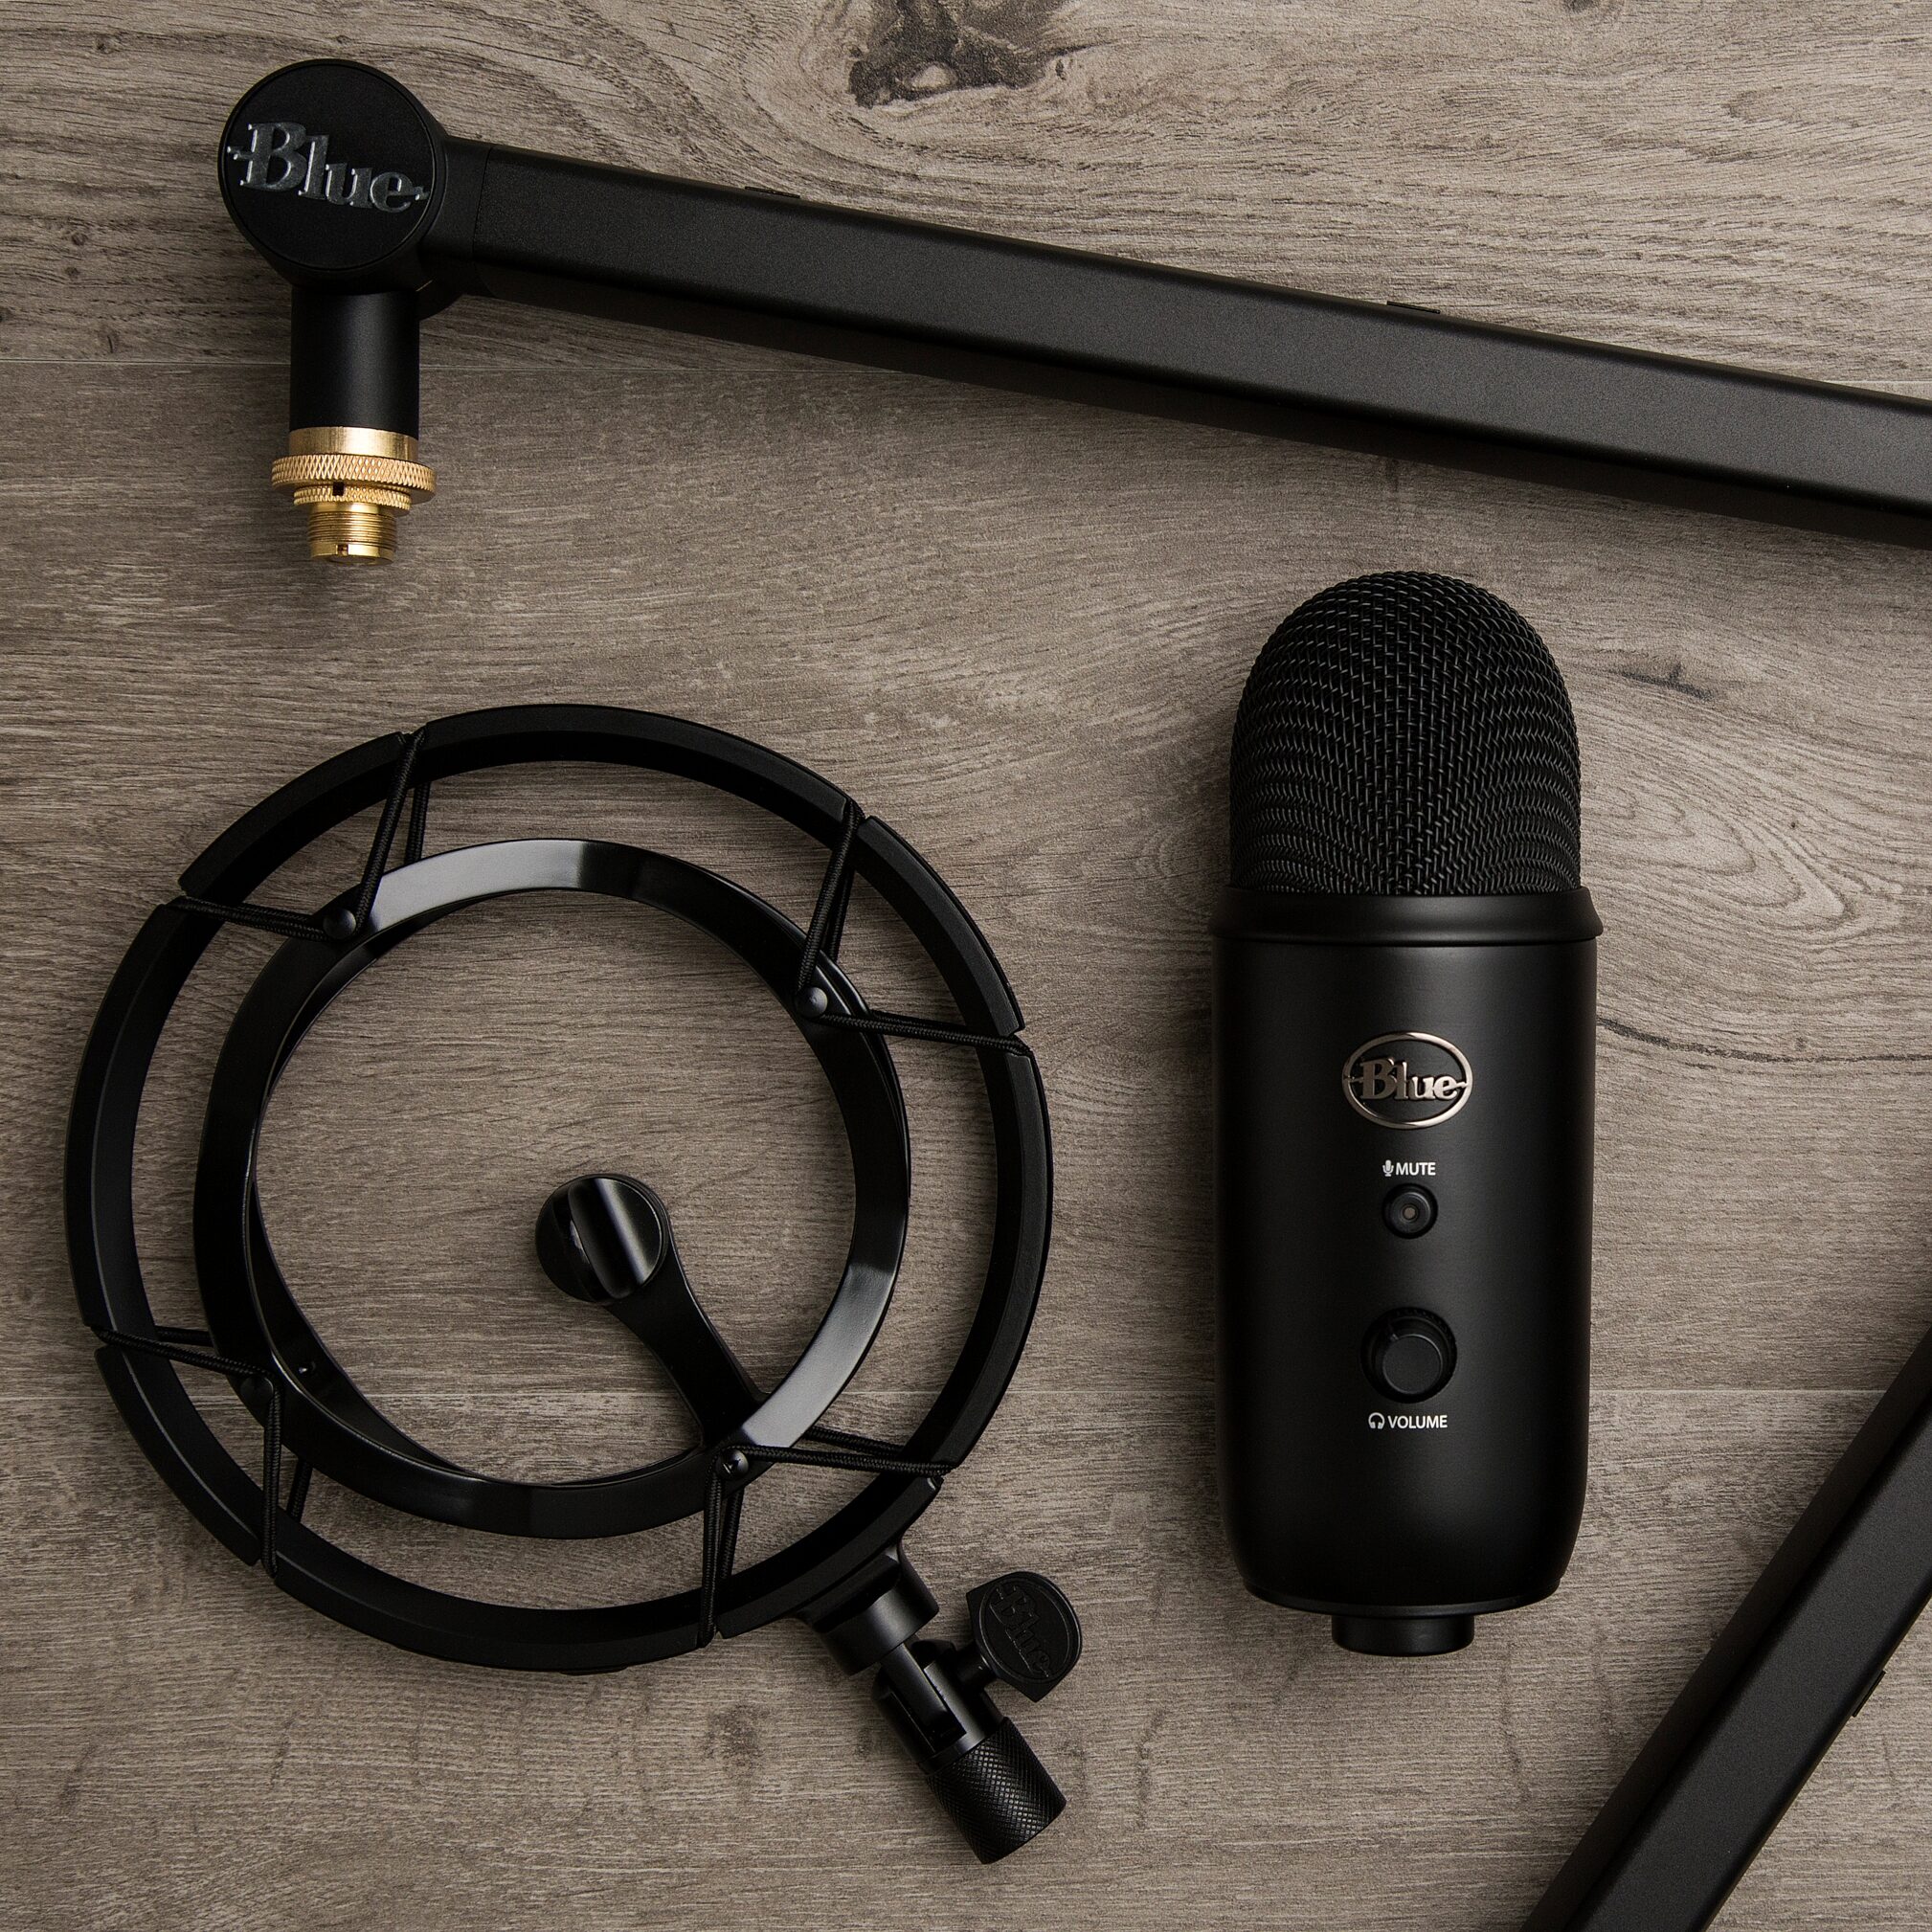 Yeti Pro USB Condenser Microphone + Tascam Headphone Bundle